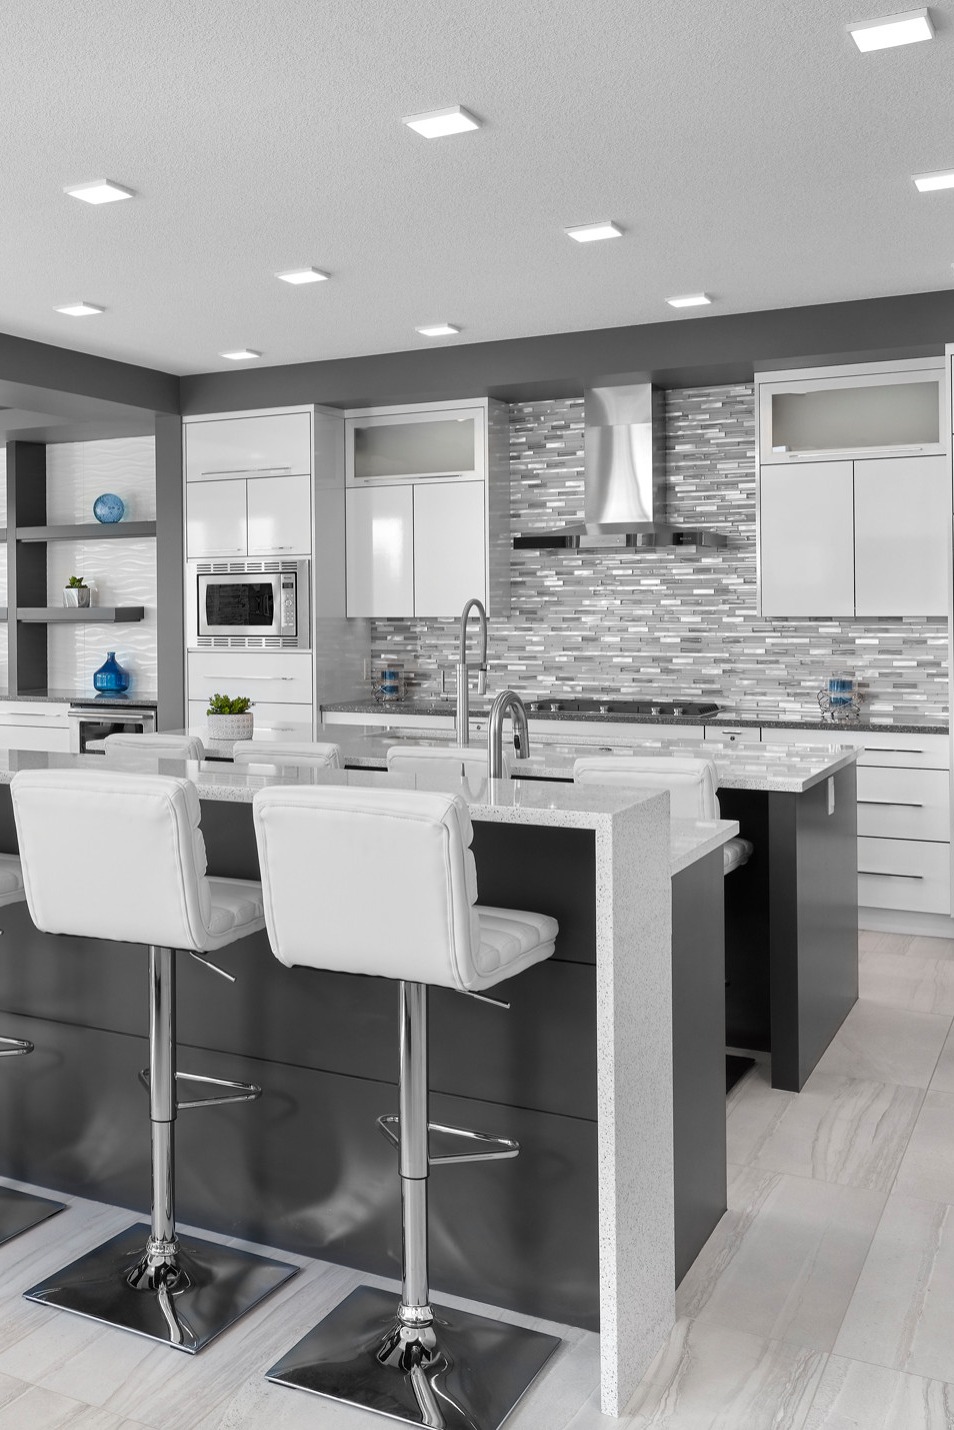 White Kitchen Design White Tile Save Designer Flat Cabinetry Range Walls Sink